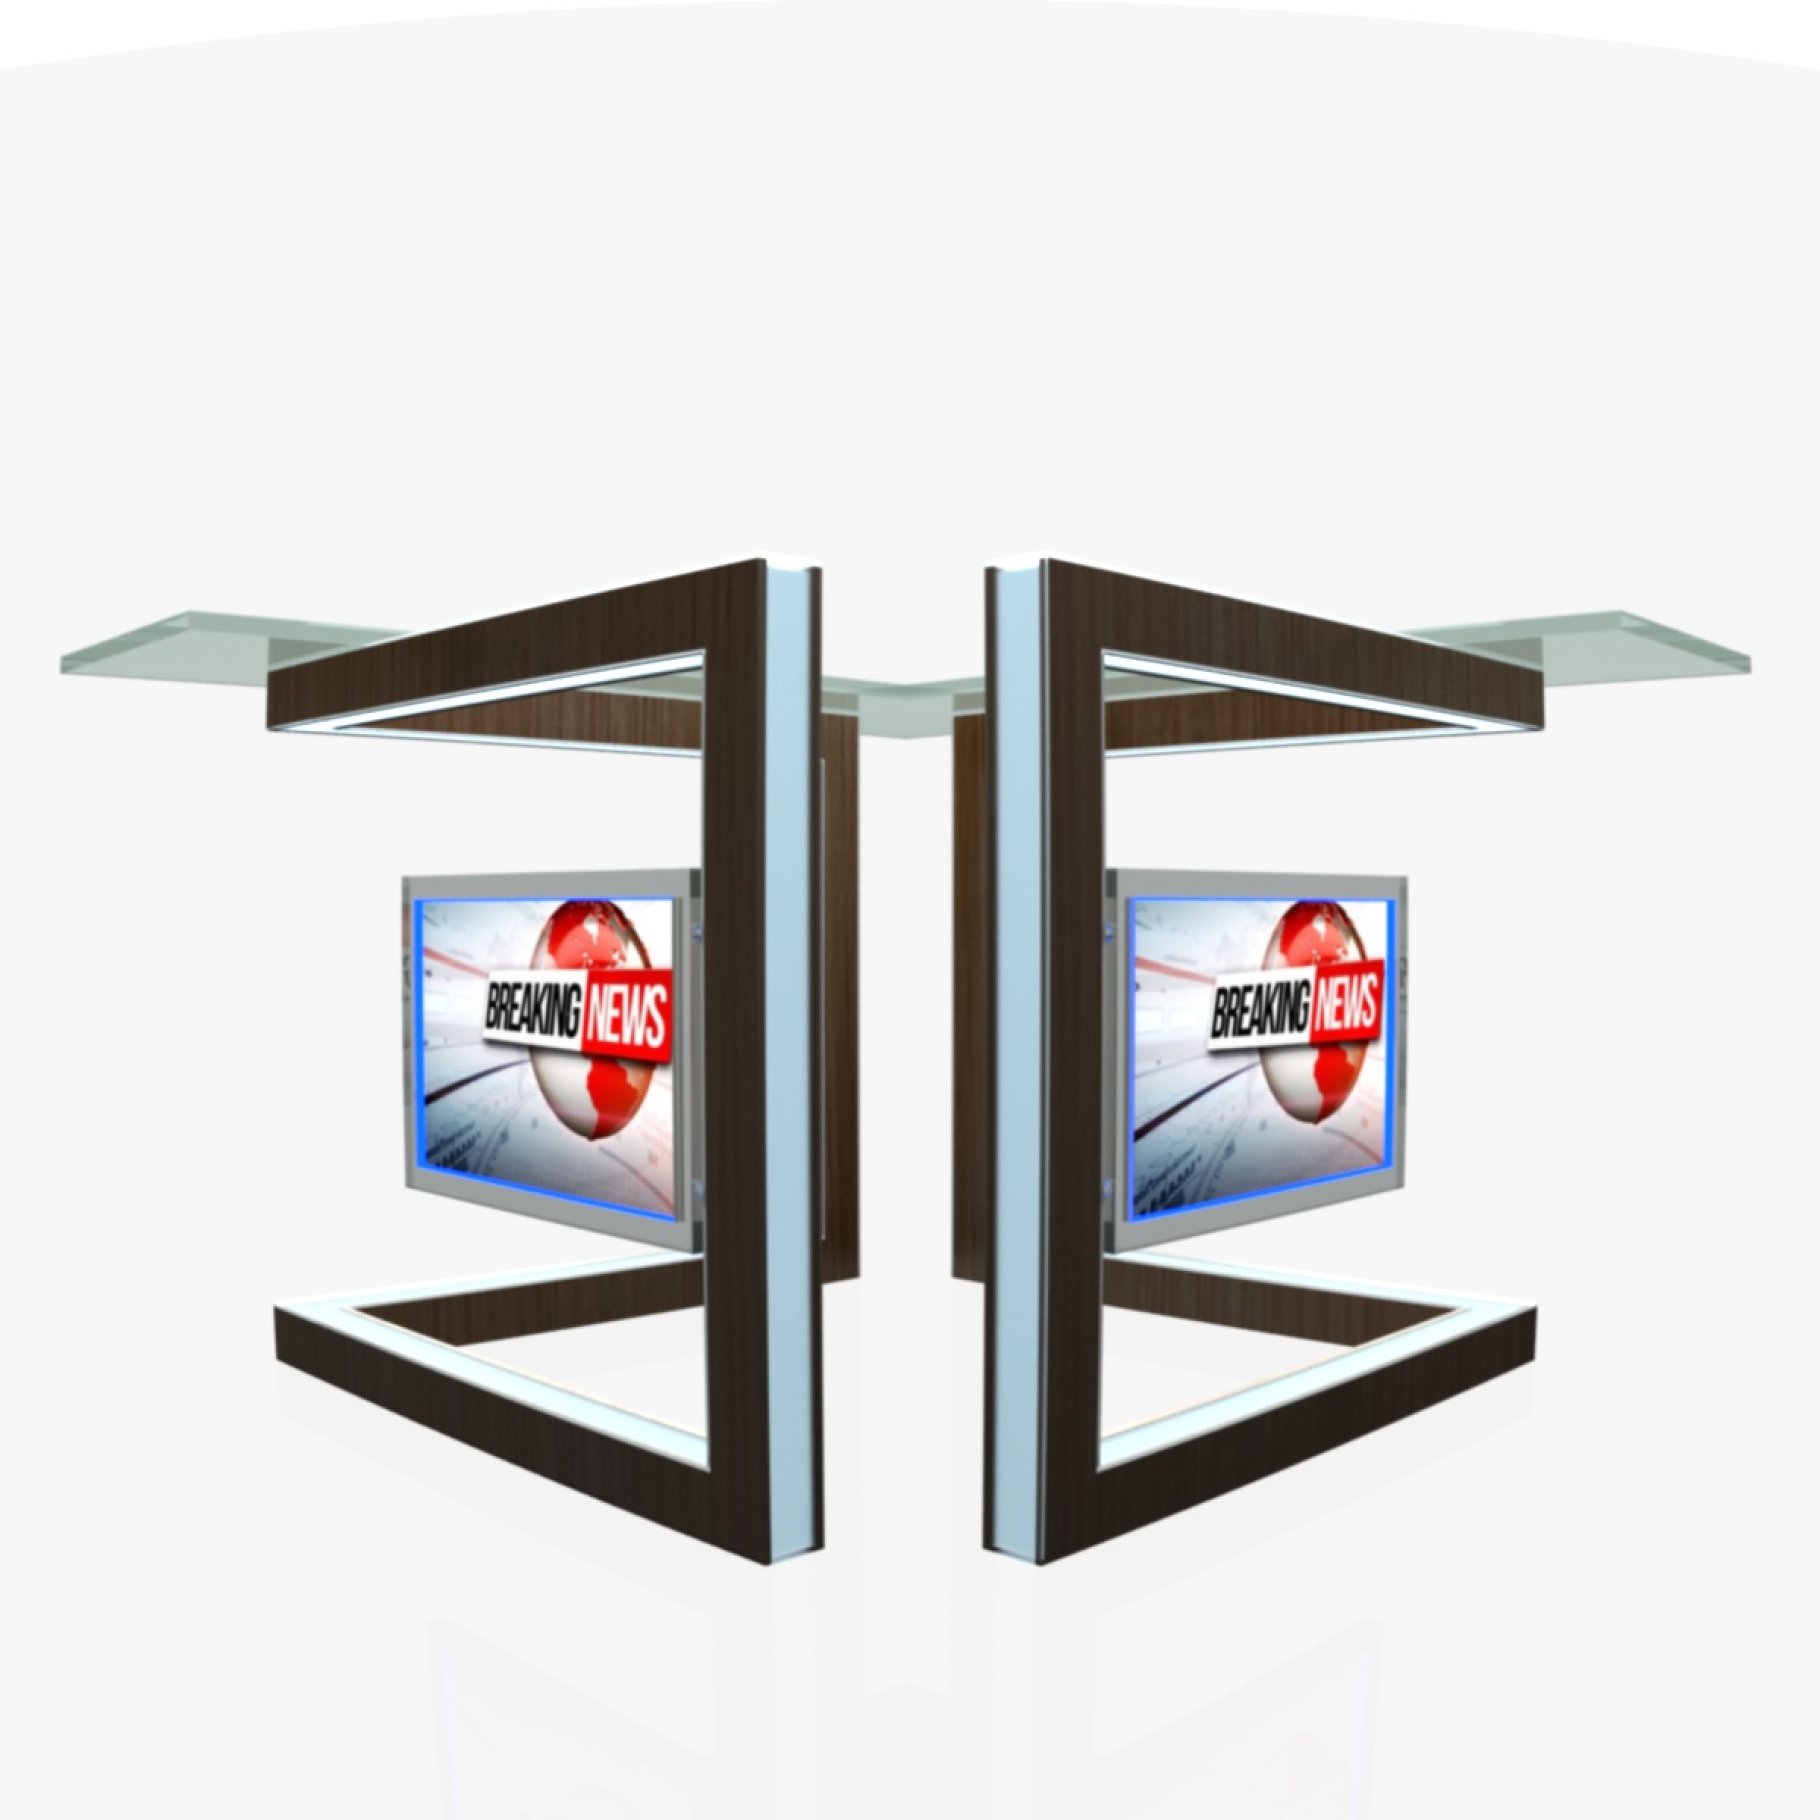 News talk show logo.